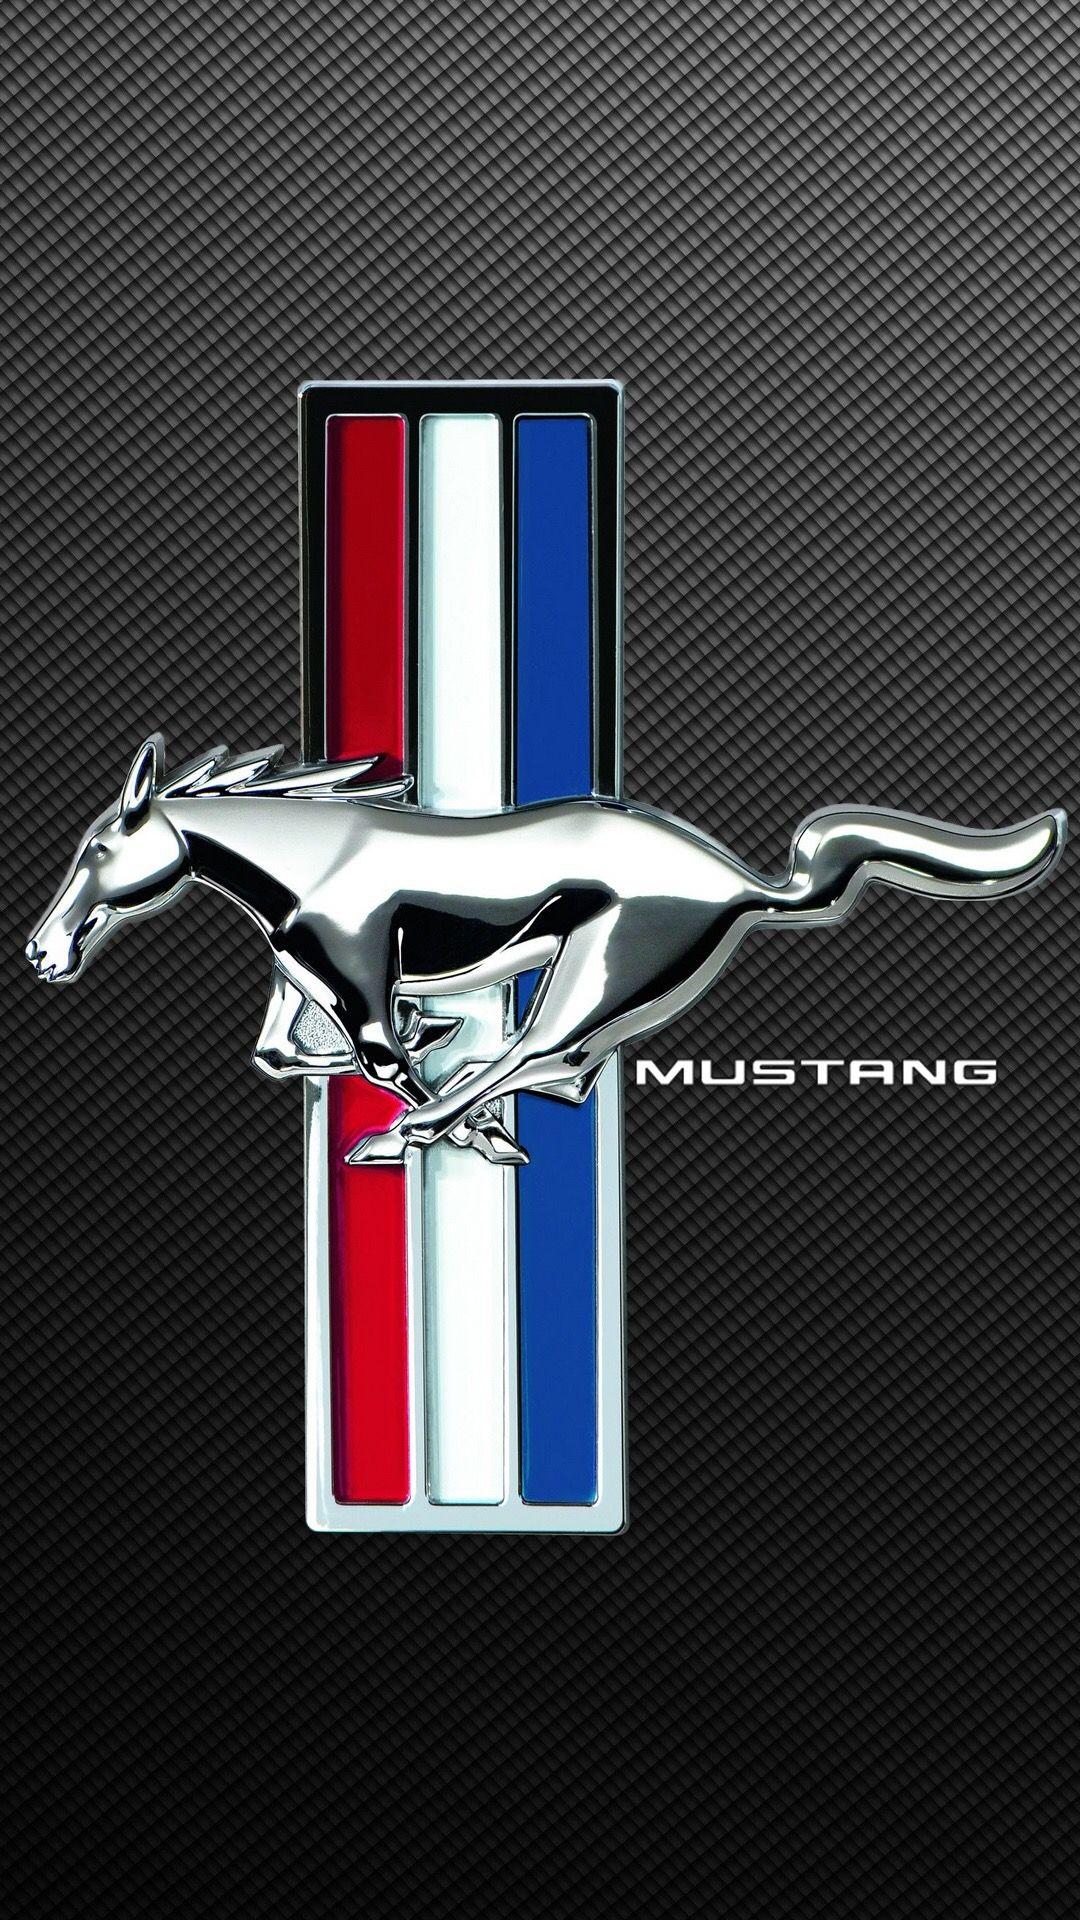 Mustang logo wallpaper. Ford mustang logo, Mustang